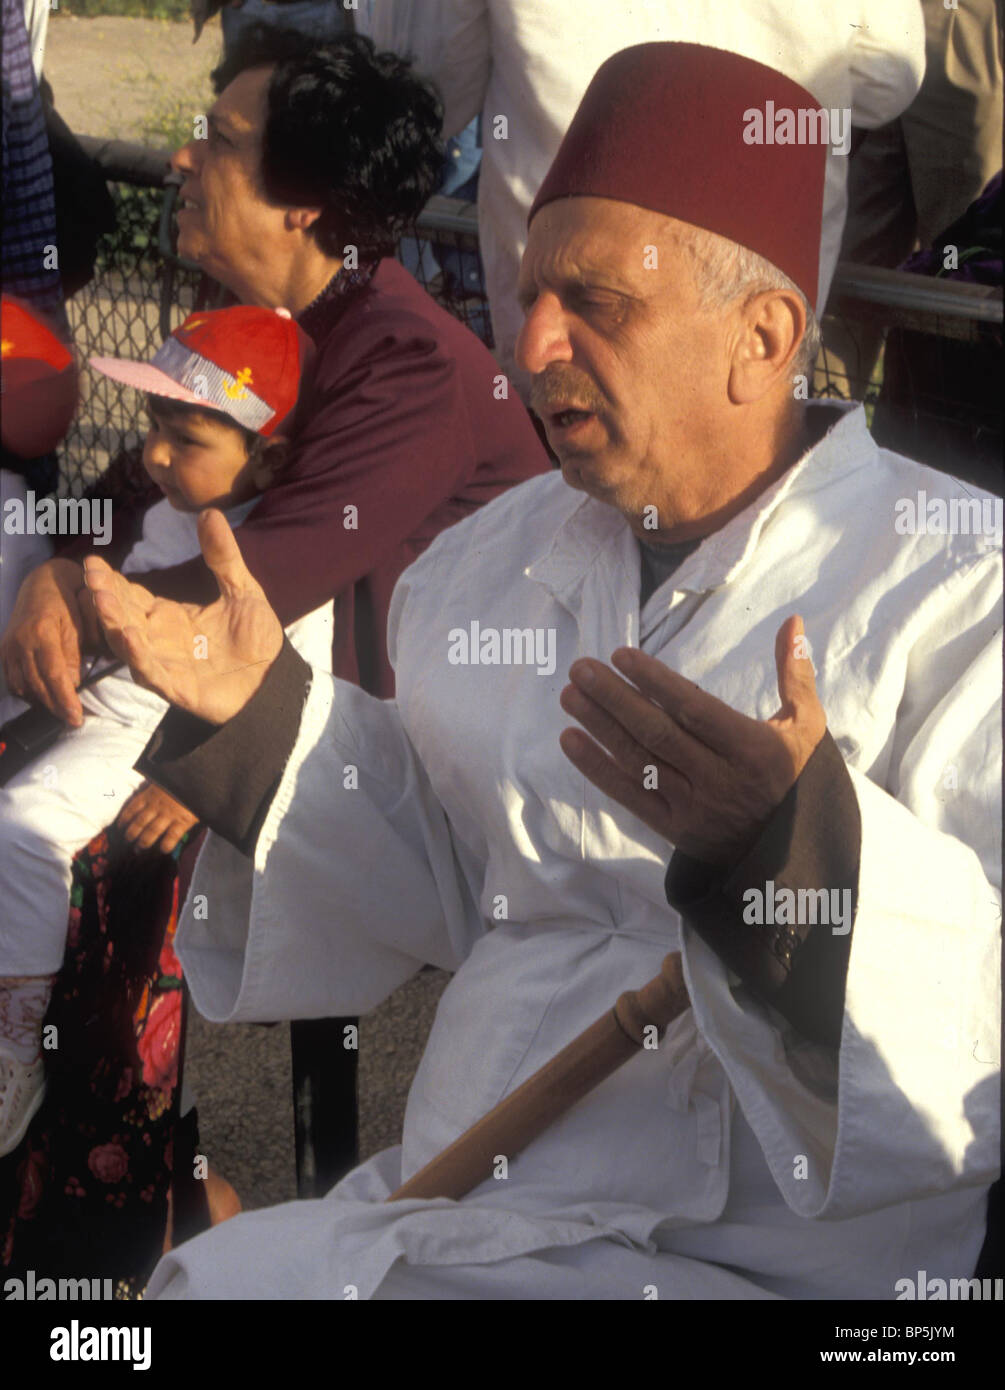 4373. SAMARITAN ELDER AT PRAYER DURING THE PASSOVER FEAST Stock Photo